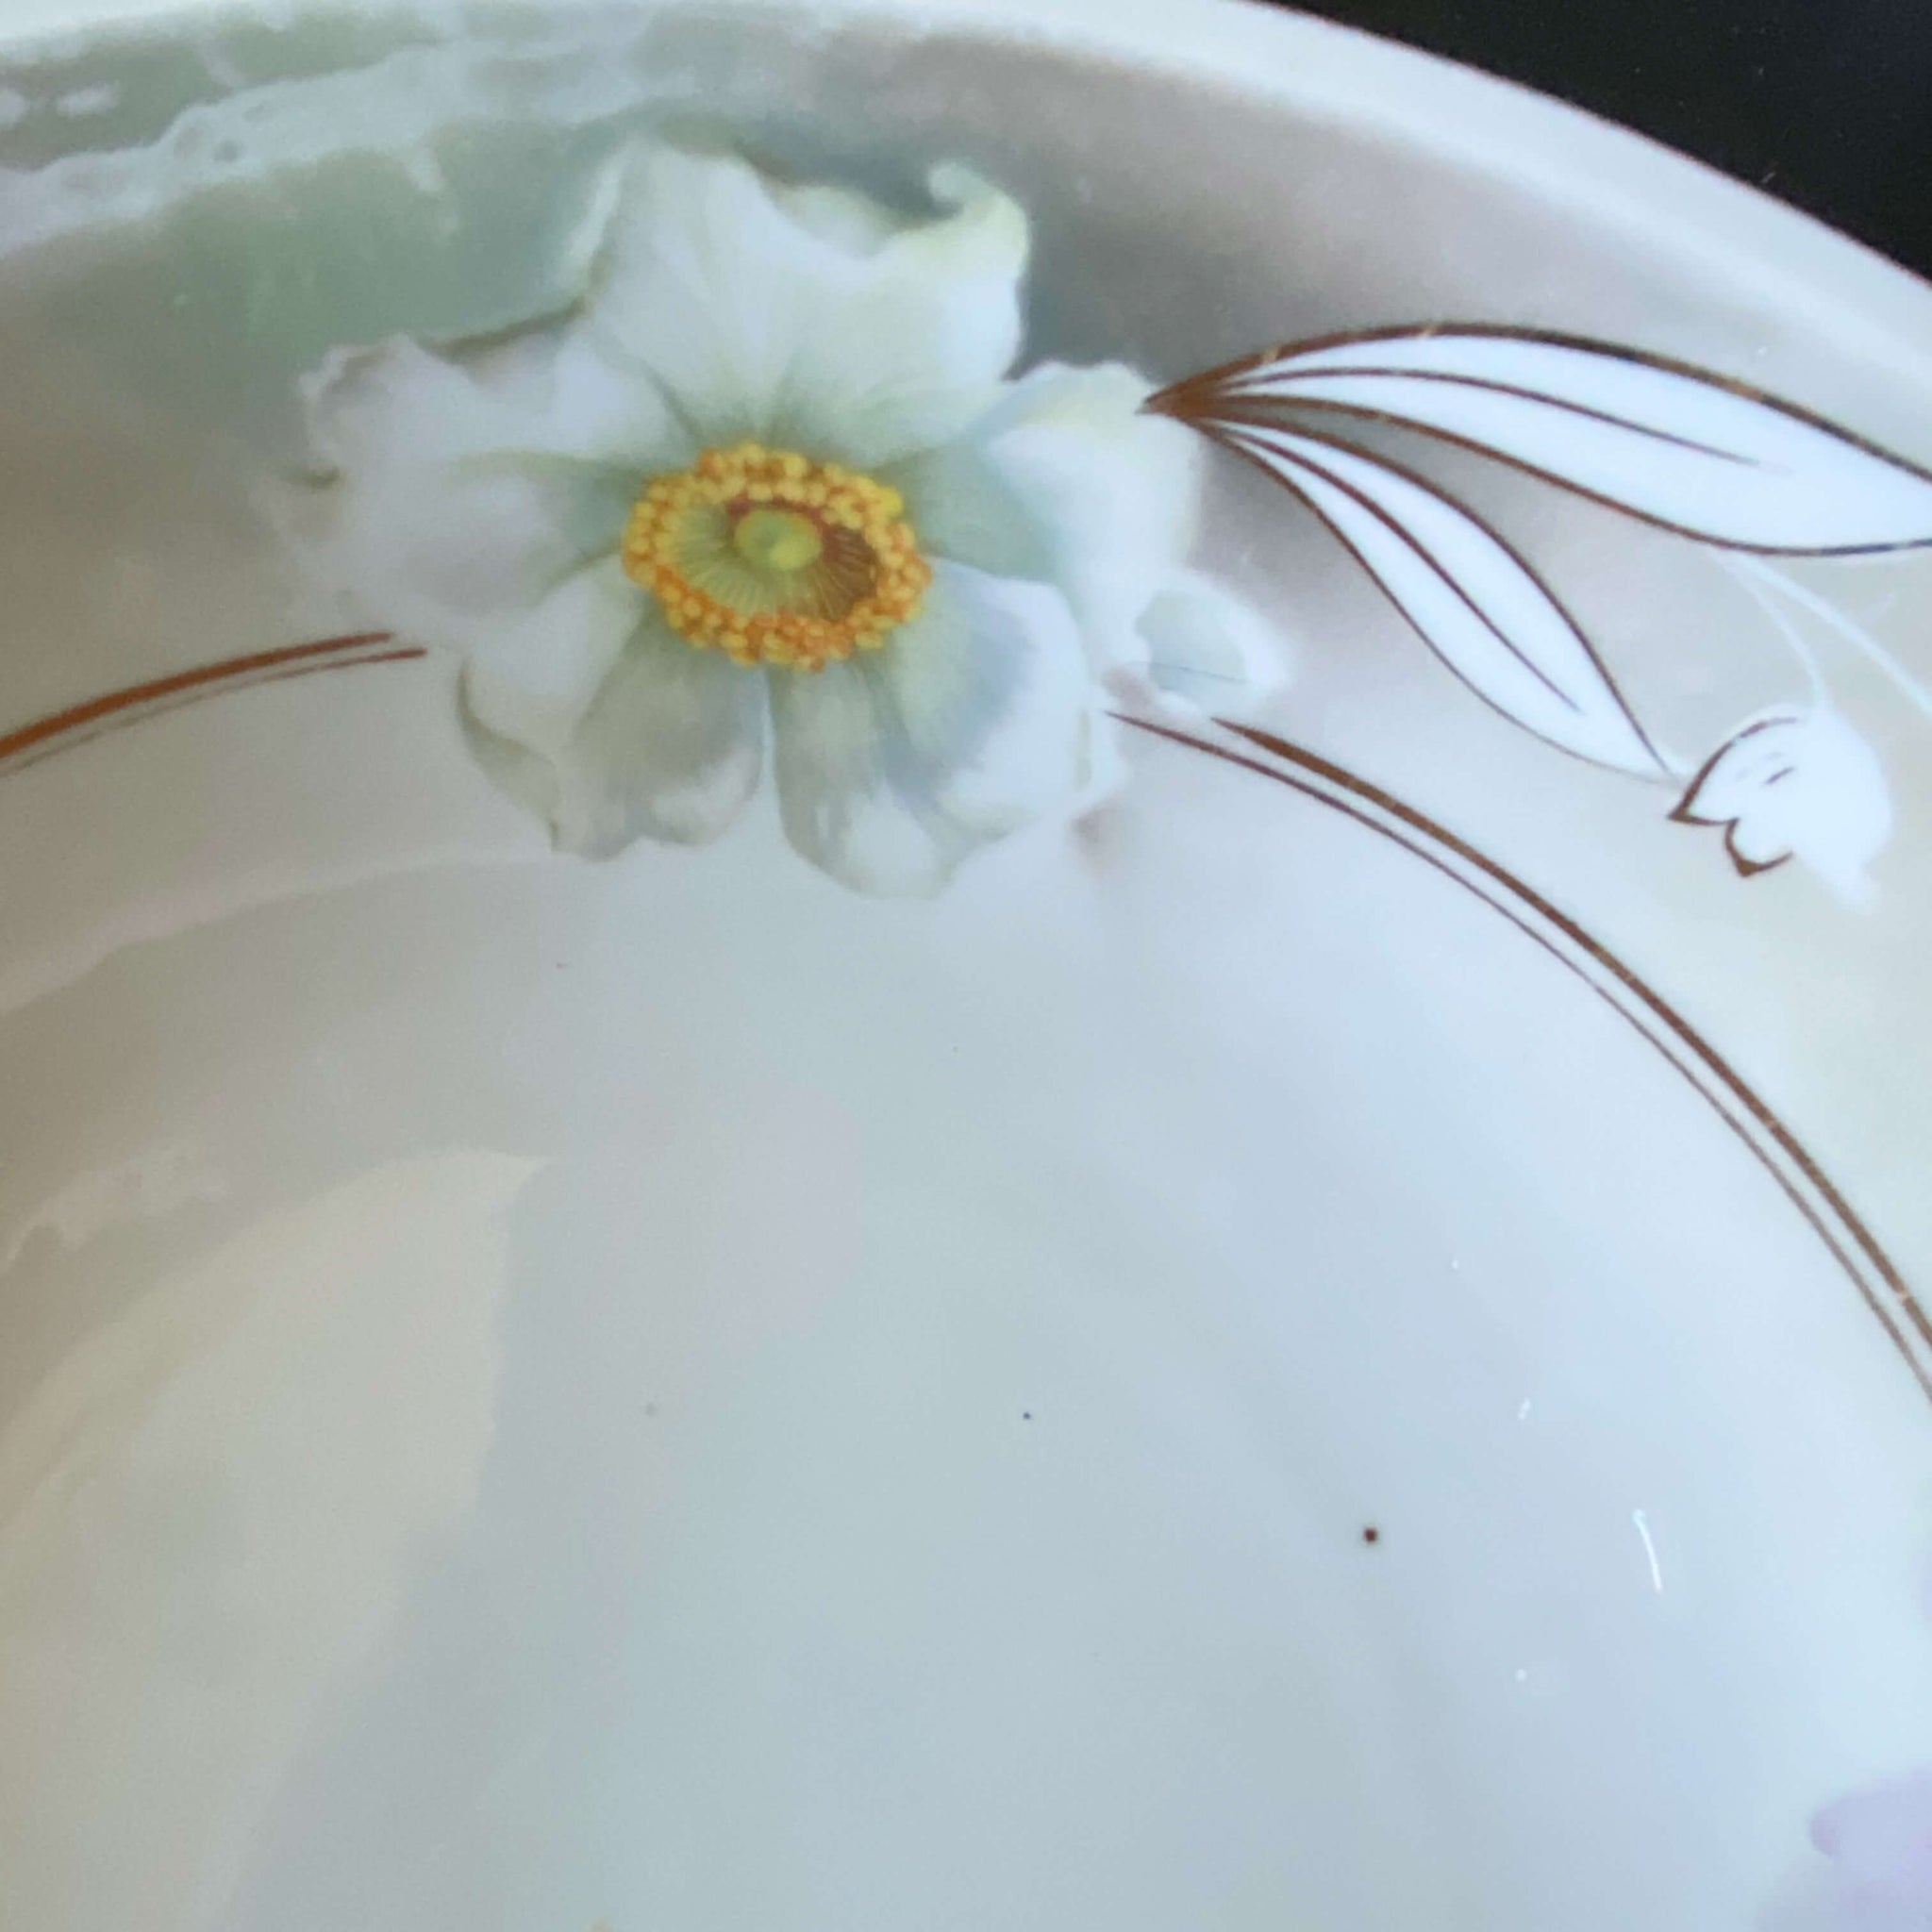 Antique German Porcelain Serving Bowl with Grey Lustreware and Gold Detailing